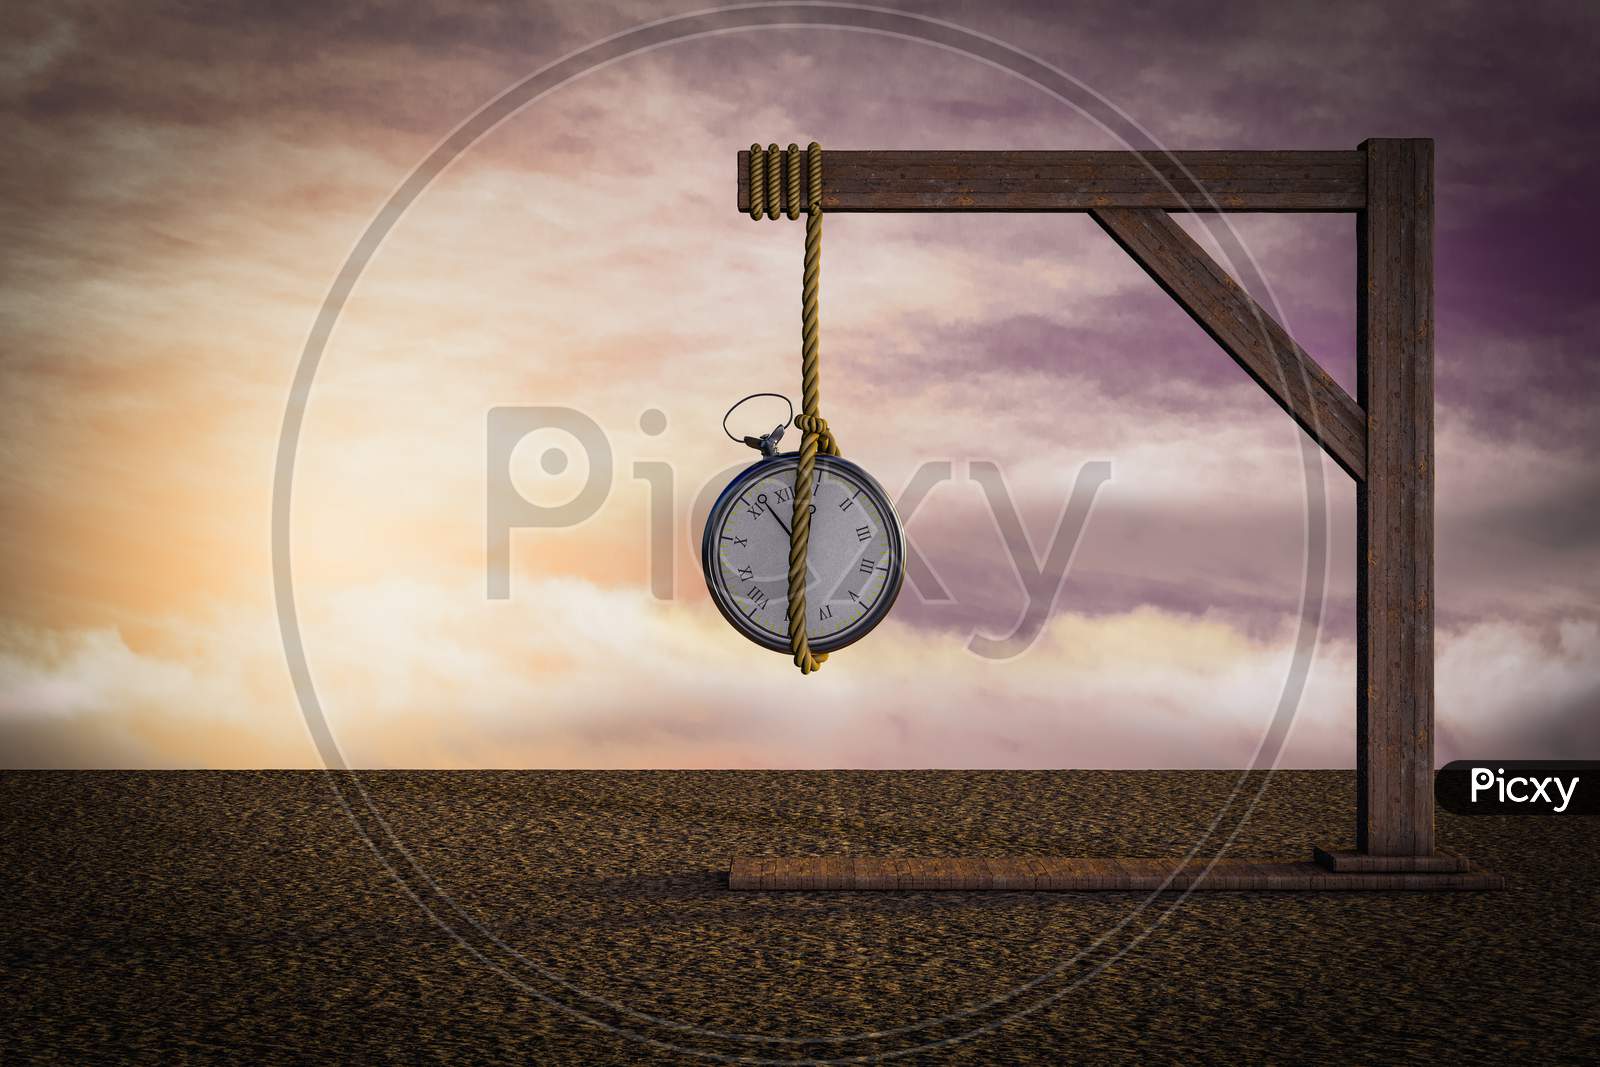 Pocket Watch On Gallows At Sunset Magenta Day Demonstrating Time Struggle Concept. 3D Illustration